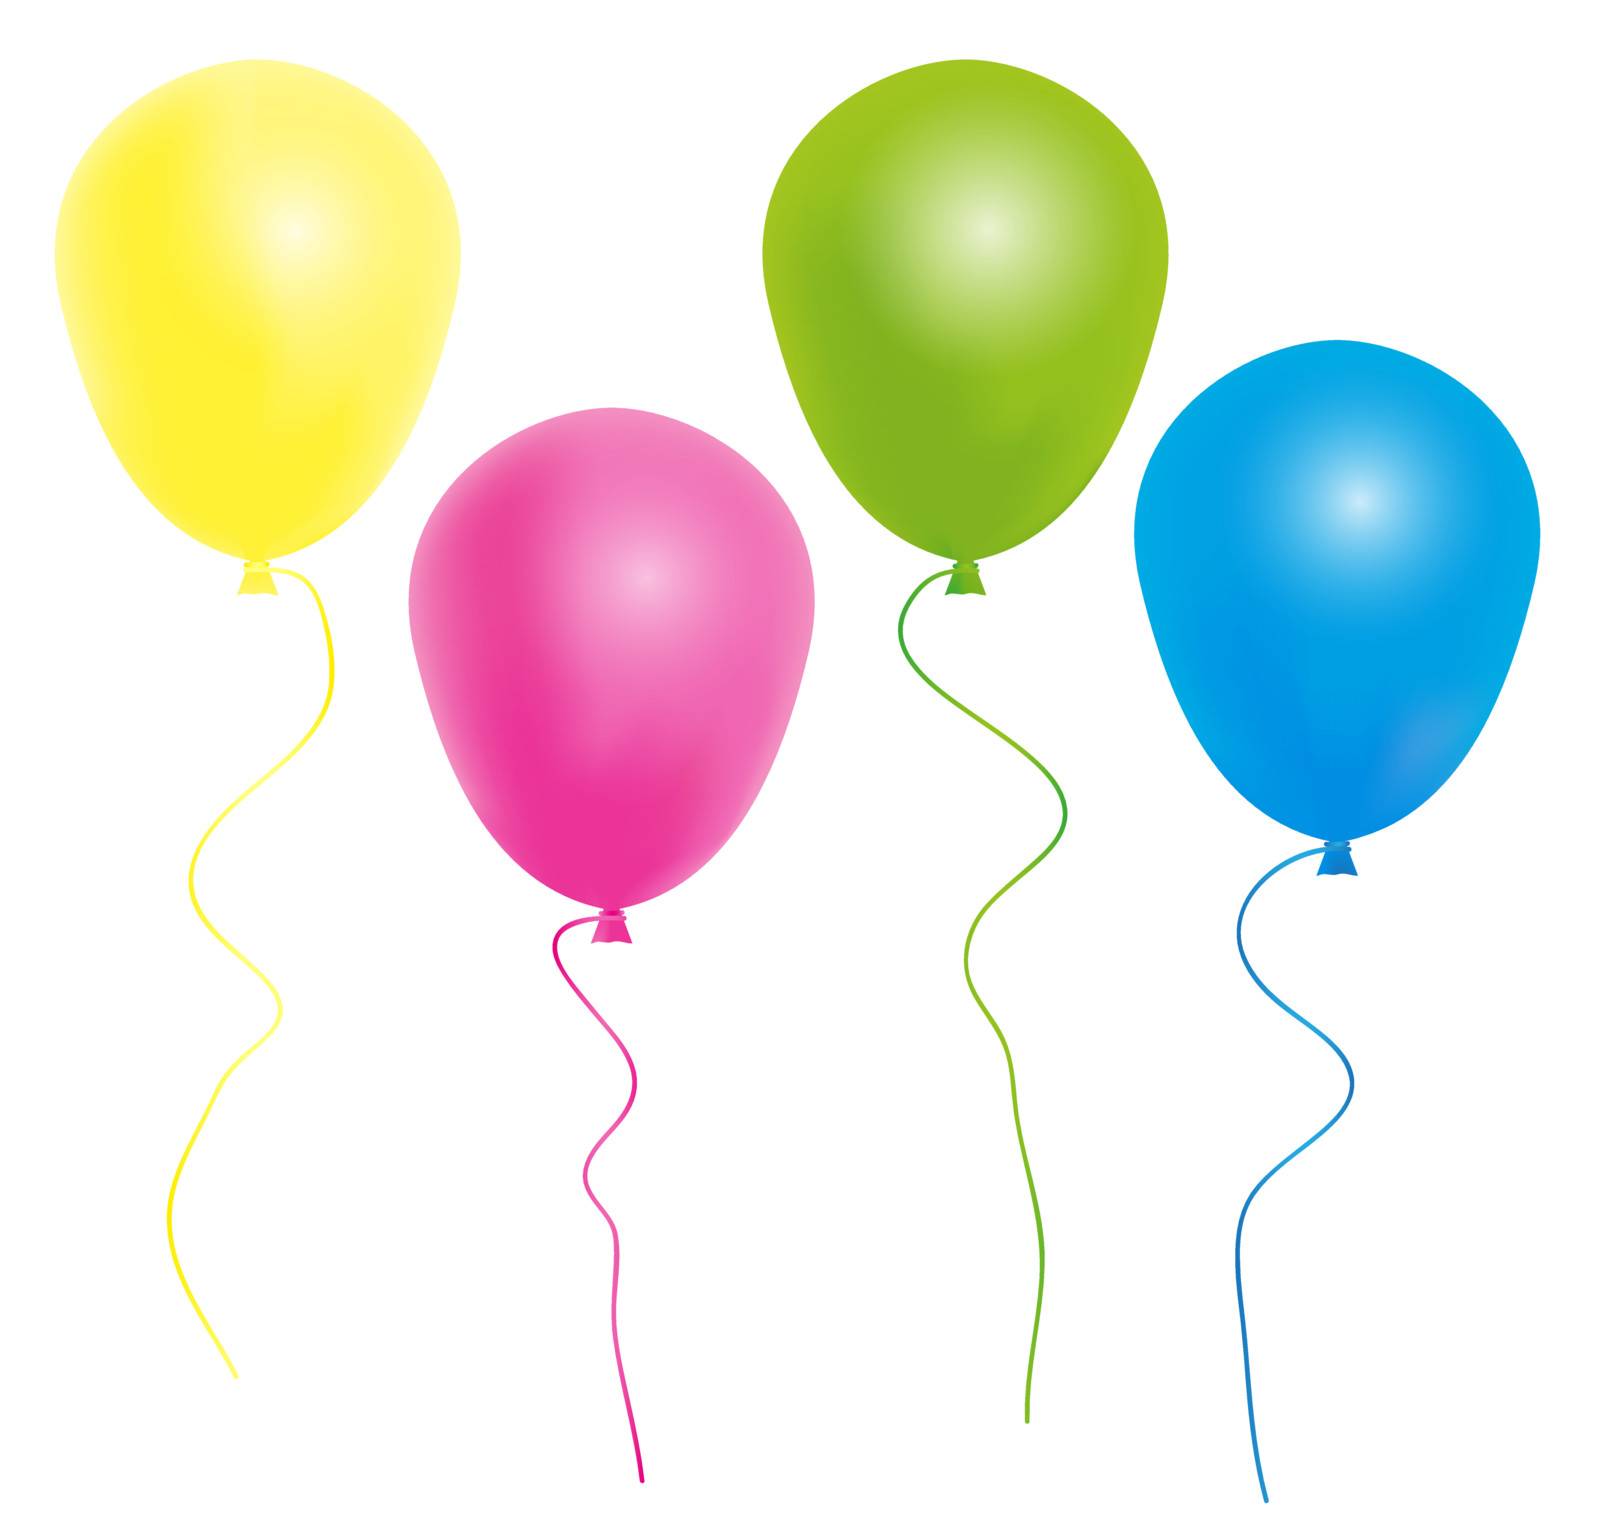 Balloons by jamdesign